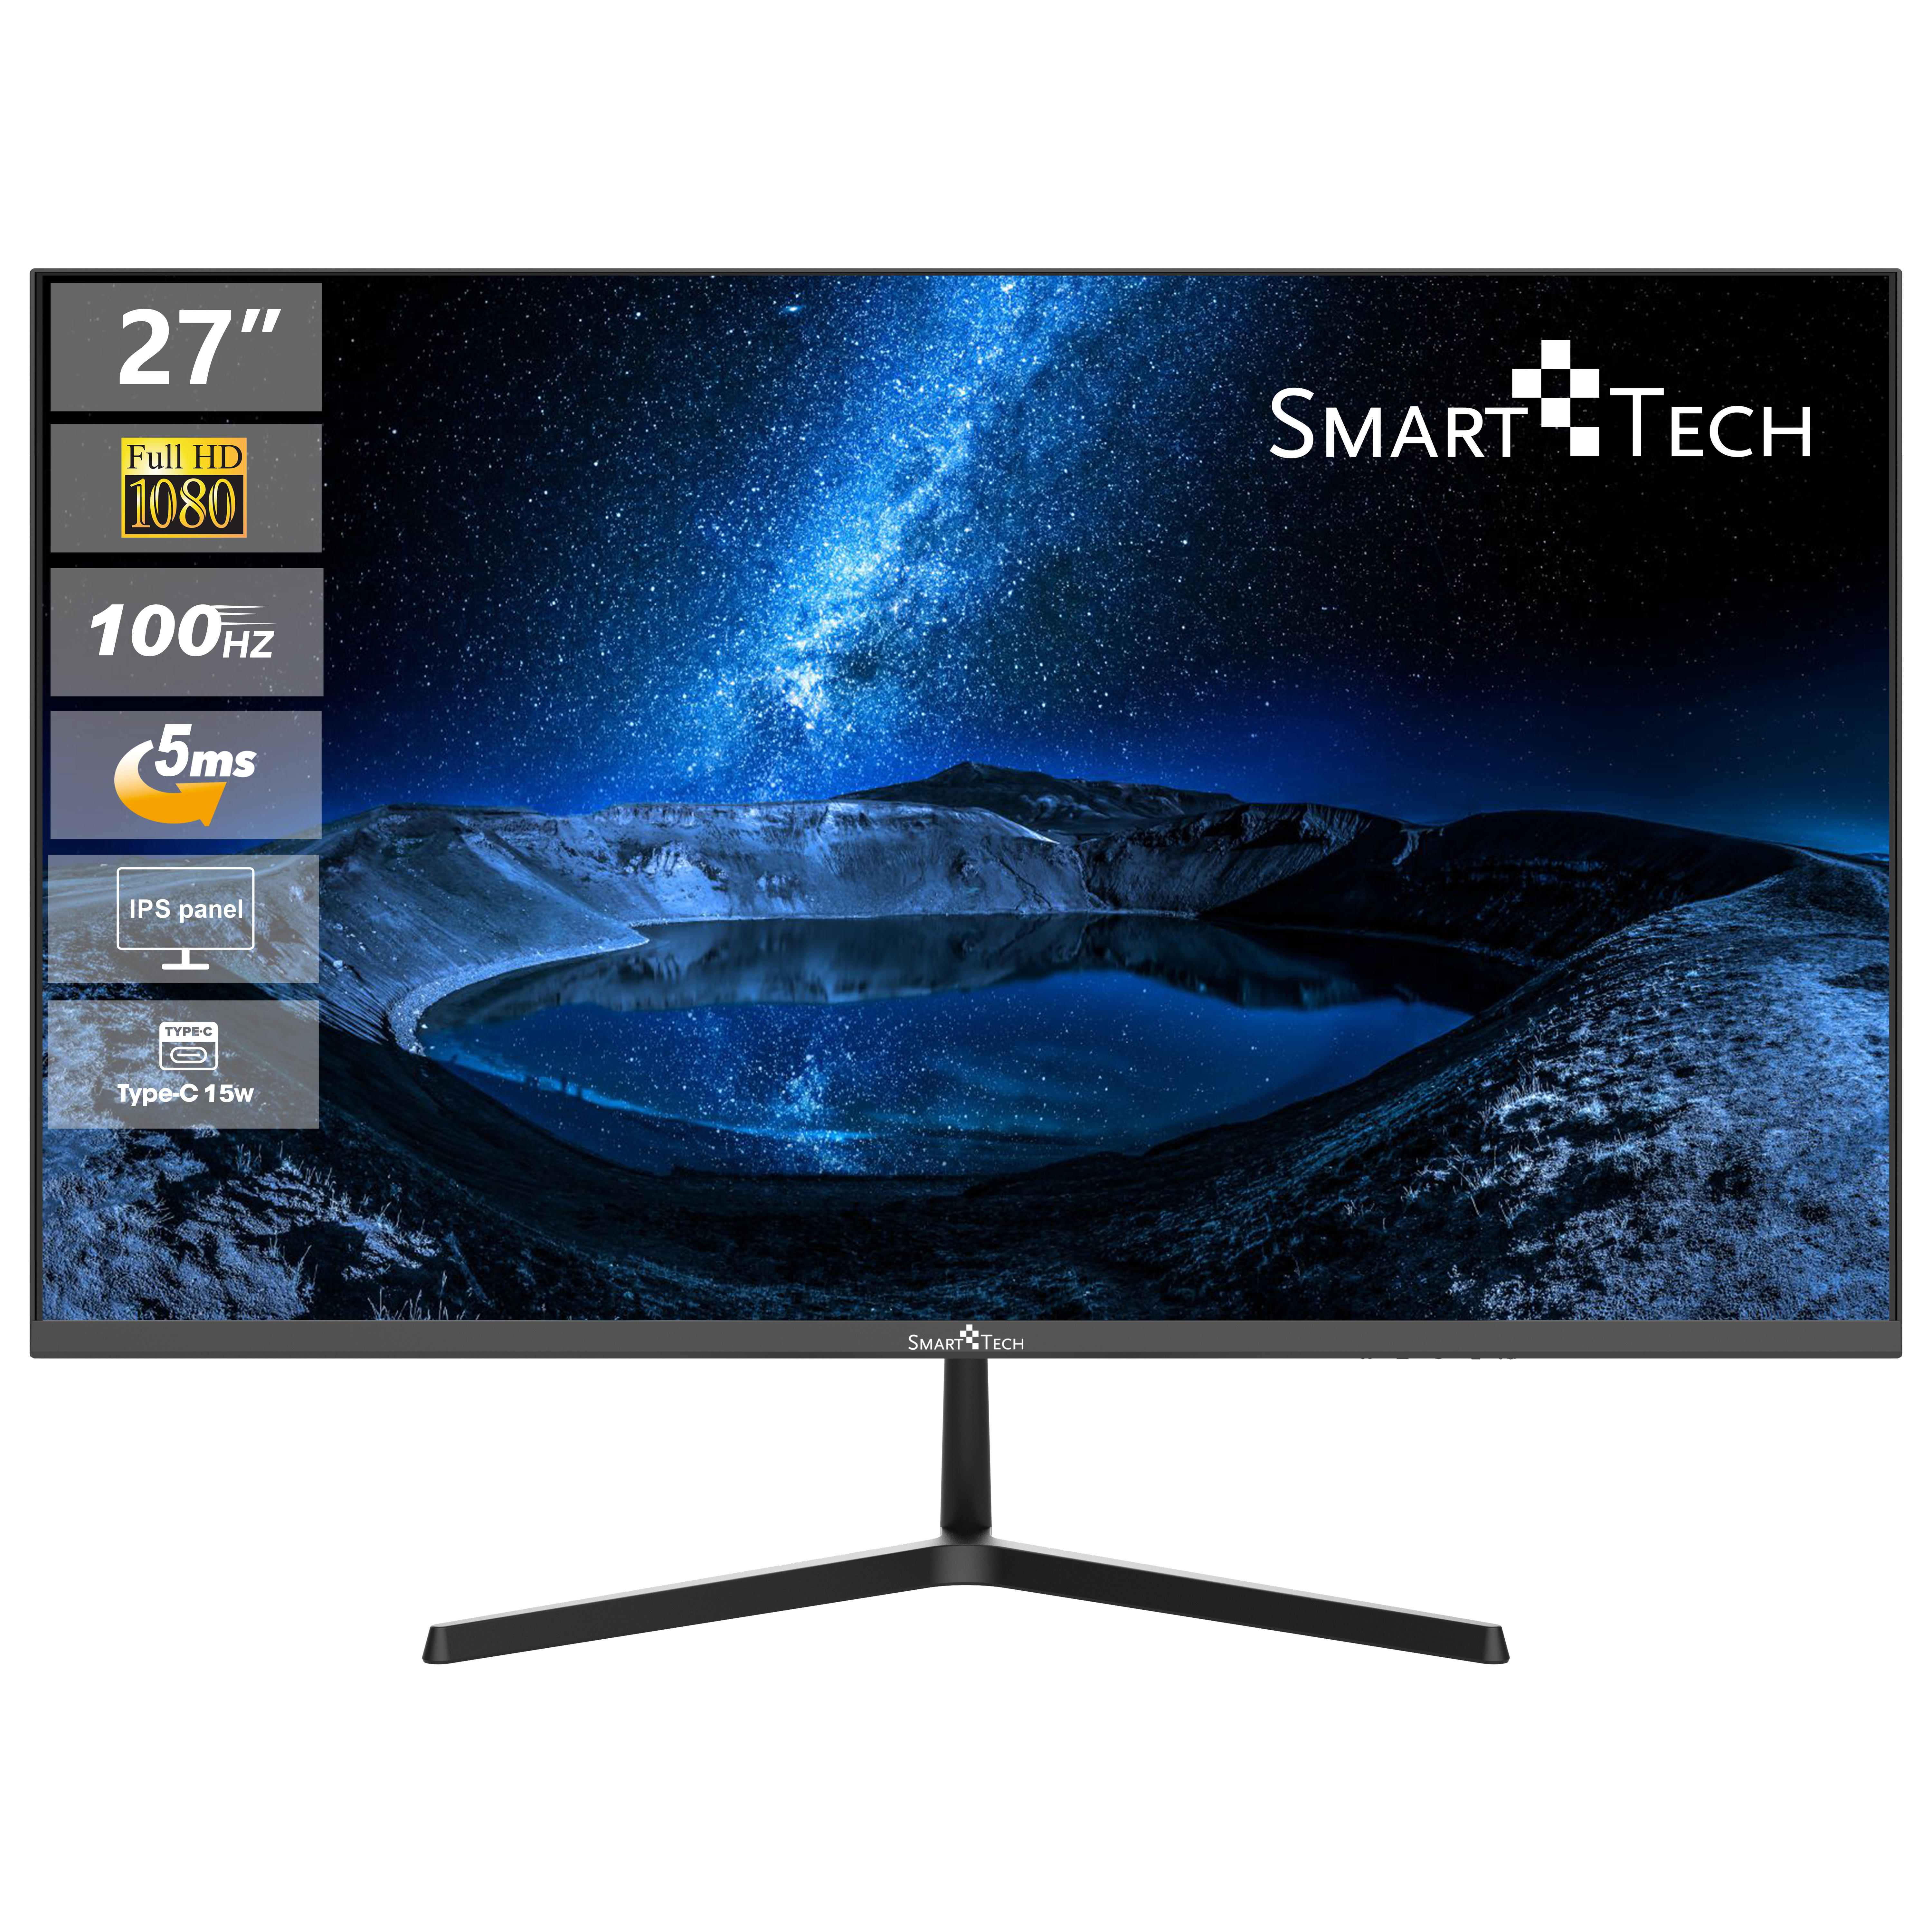 SMART TECH 270N02XIF 27 Zoll , 75HZ (4 Reaktionszeit Full-HD ) Business ms Monitor